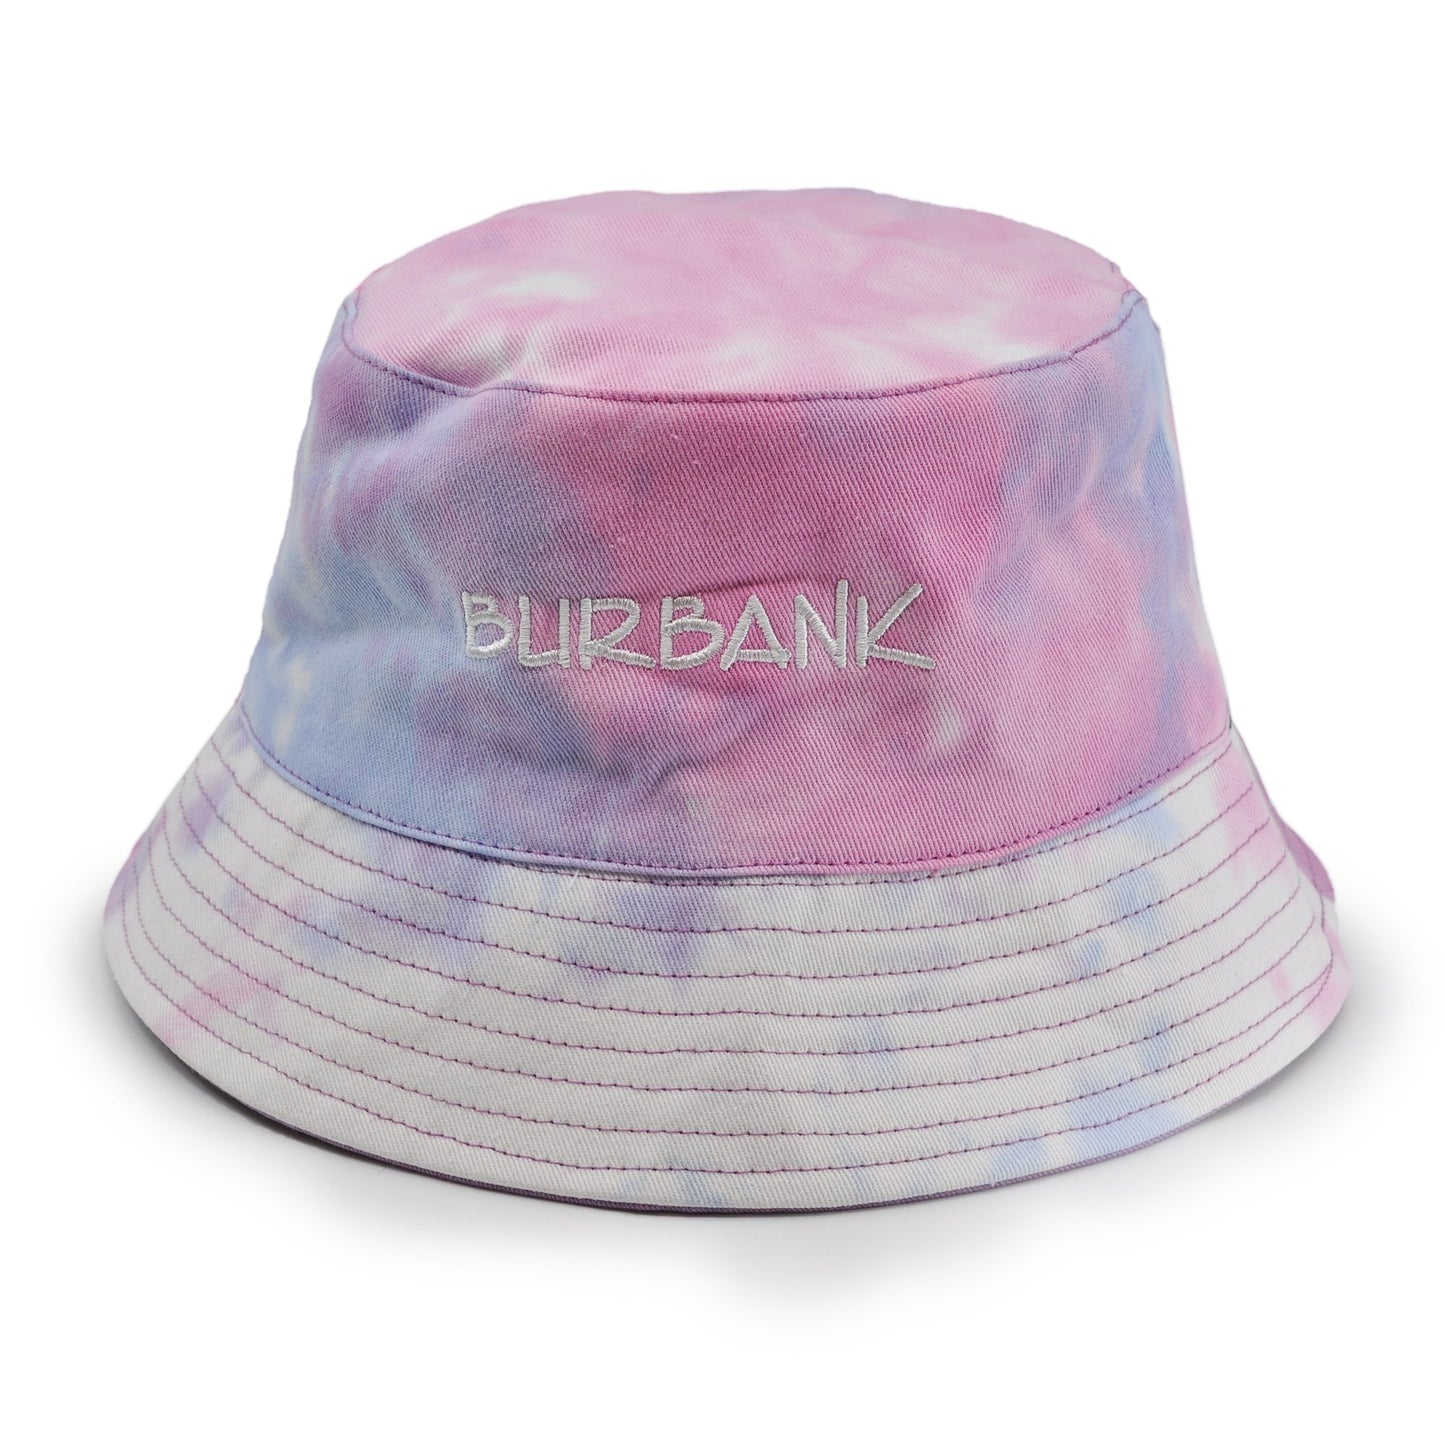 Reversible Your Beach City Unisex 100% Cotton Packable Summer Travel Bucket Beach Sun Hat Outdoor Cap. (Tie Dye Pink/Pink)